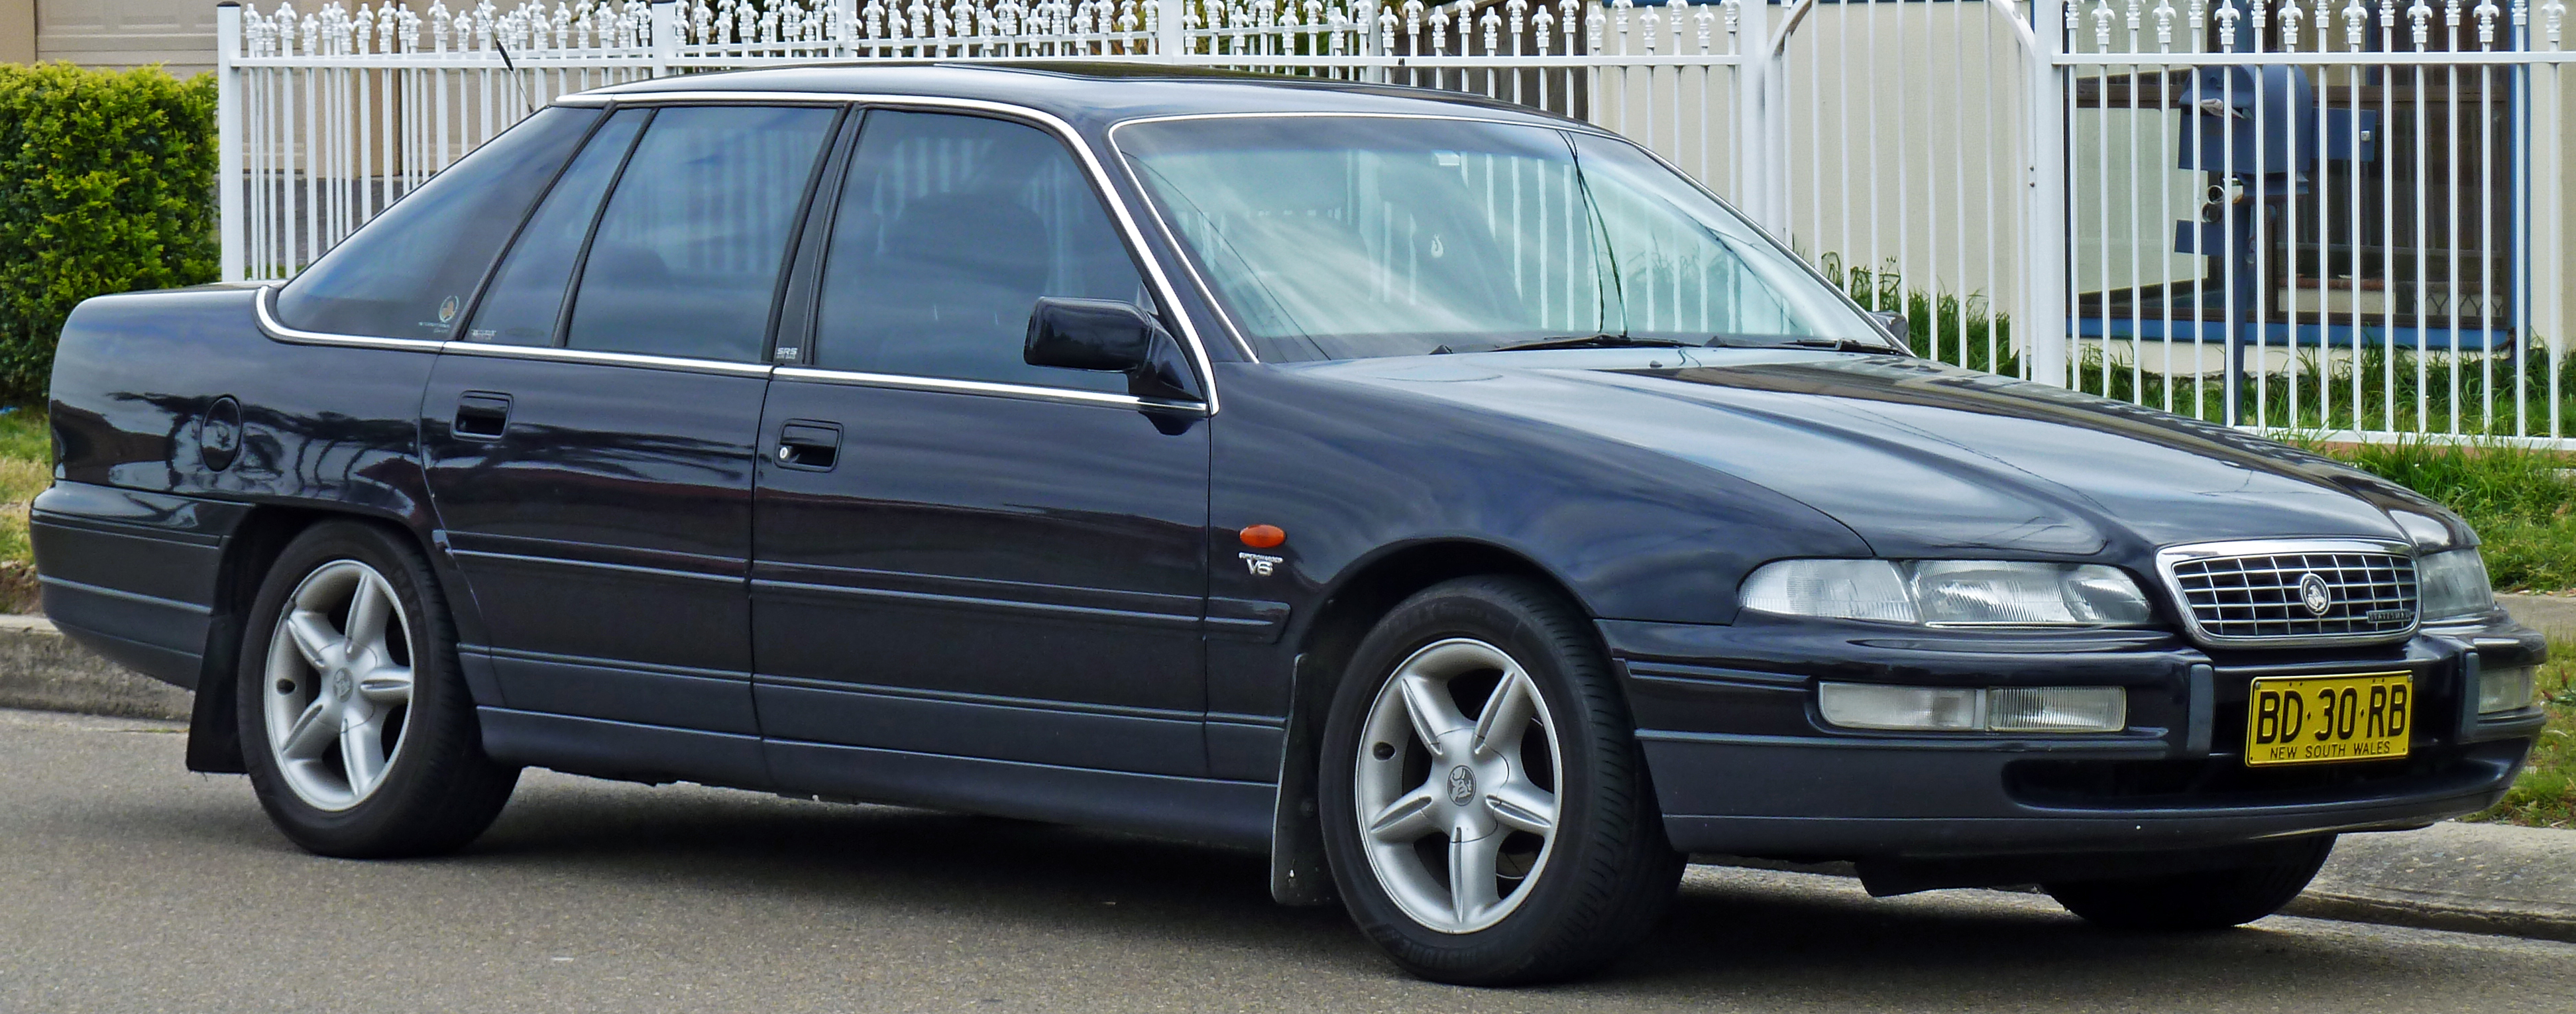 1997 Holden VS II Statesman International sedan 01